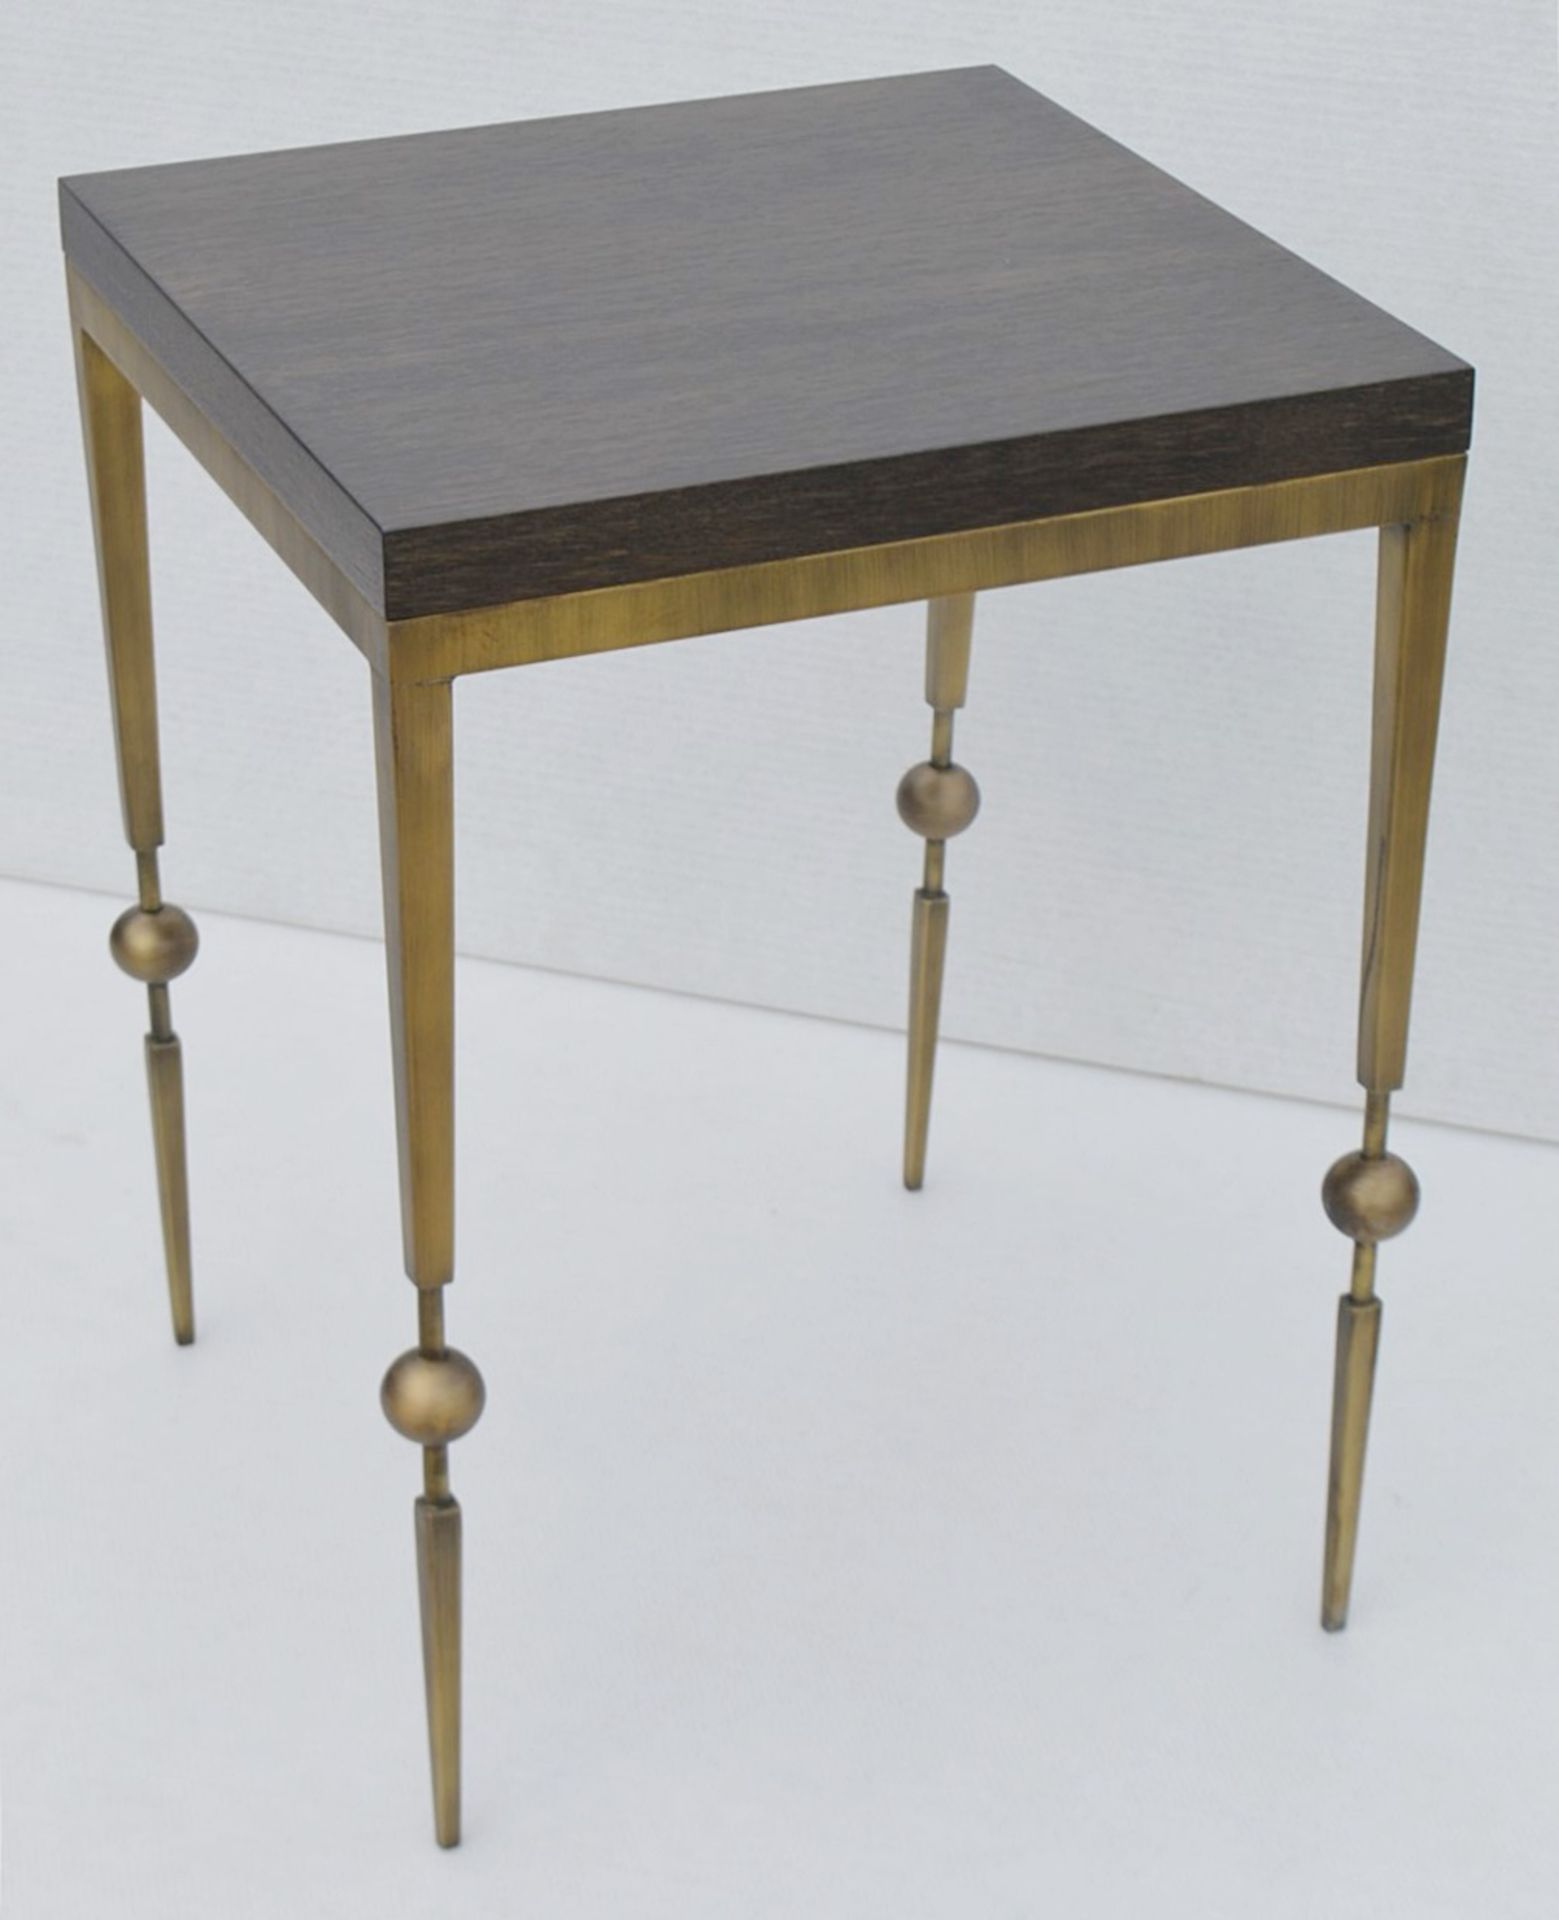 1 x JUSTIN VAN BREDA 'Sphere' Designer Occasional Table - Dimensions: H70 x W52 x D52cm - Ref: